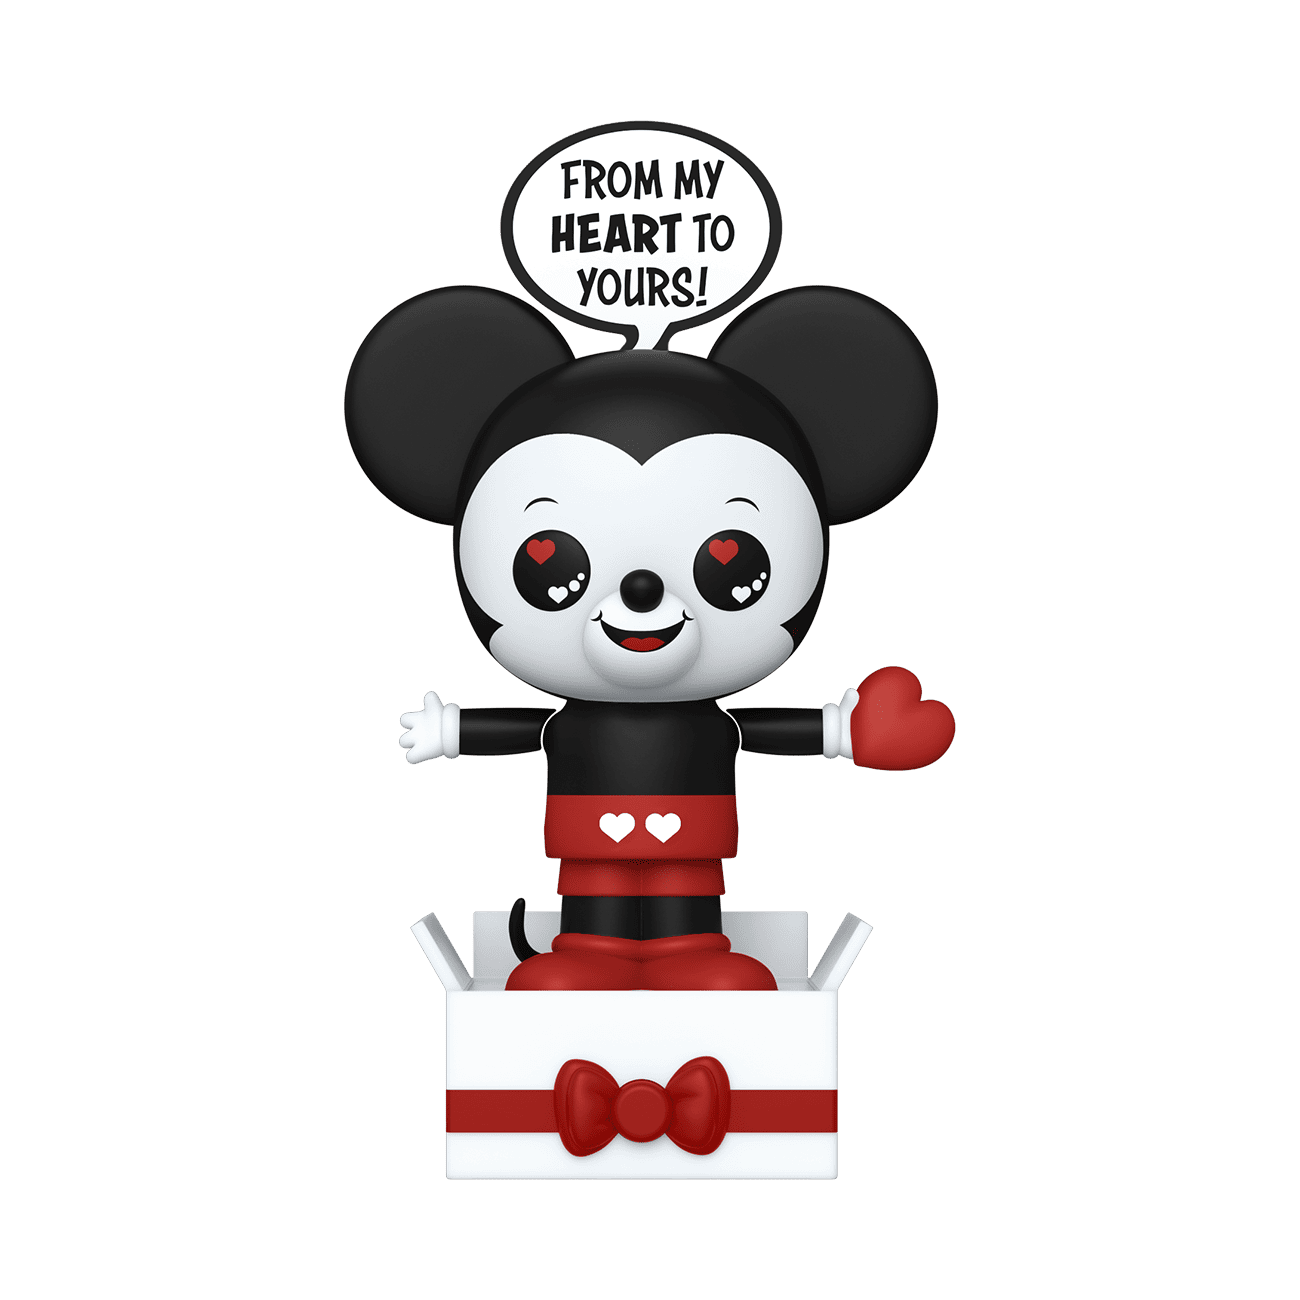 Funko Pop Minnie y Mickey San Valentín